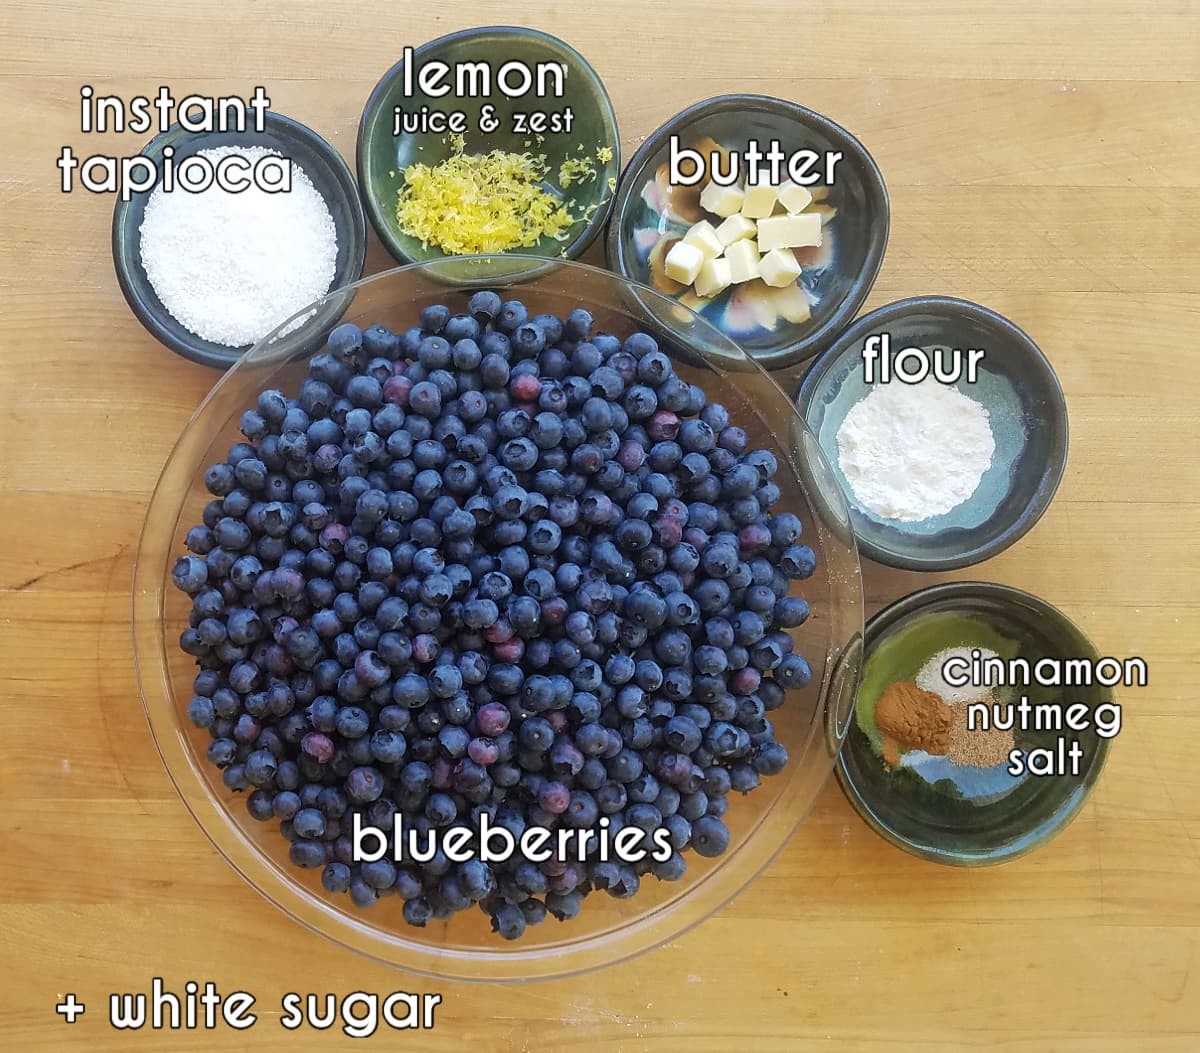 Ingredients for blueberry pie filling: blueberries, tapioca, lemon, flour, spices, butter.